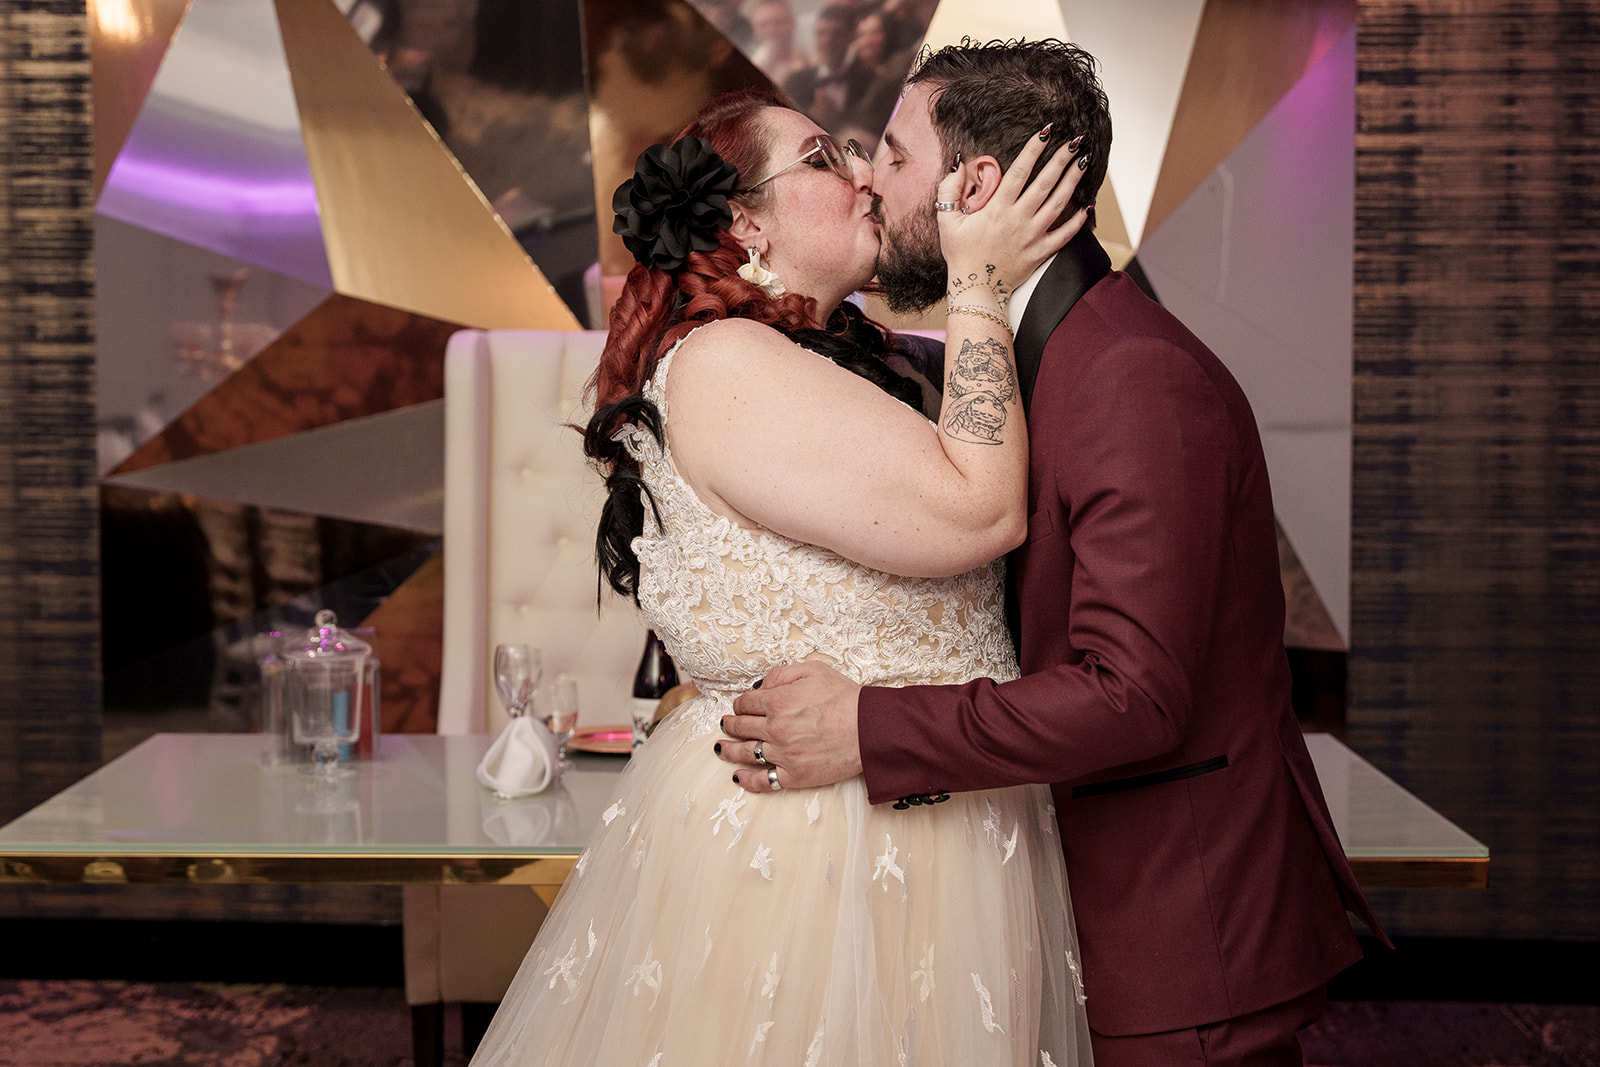 gothic wedding ceremony, first kiss